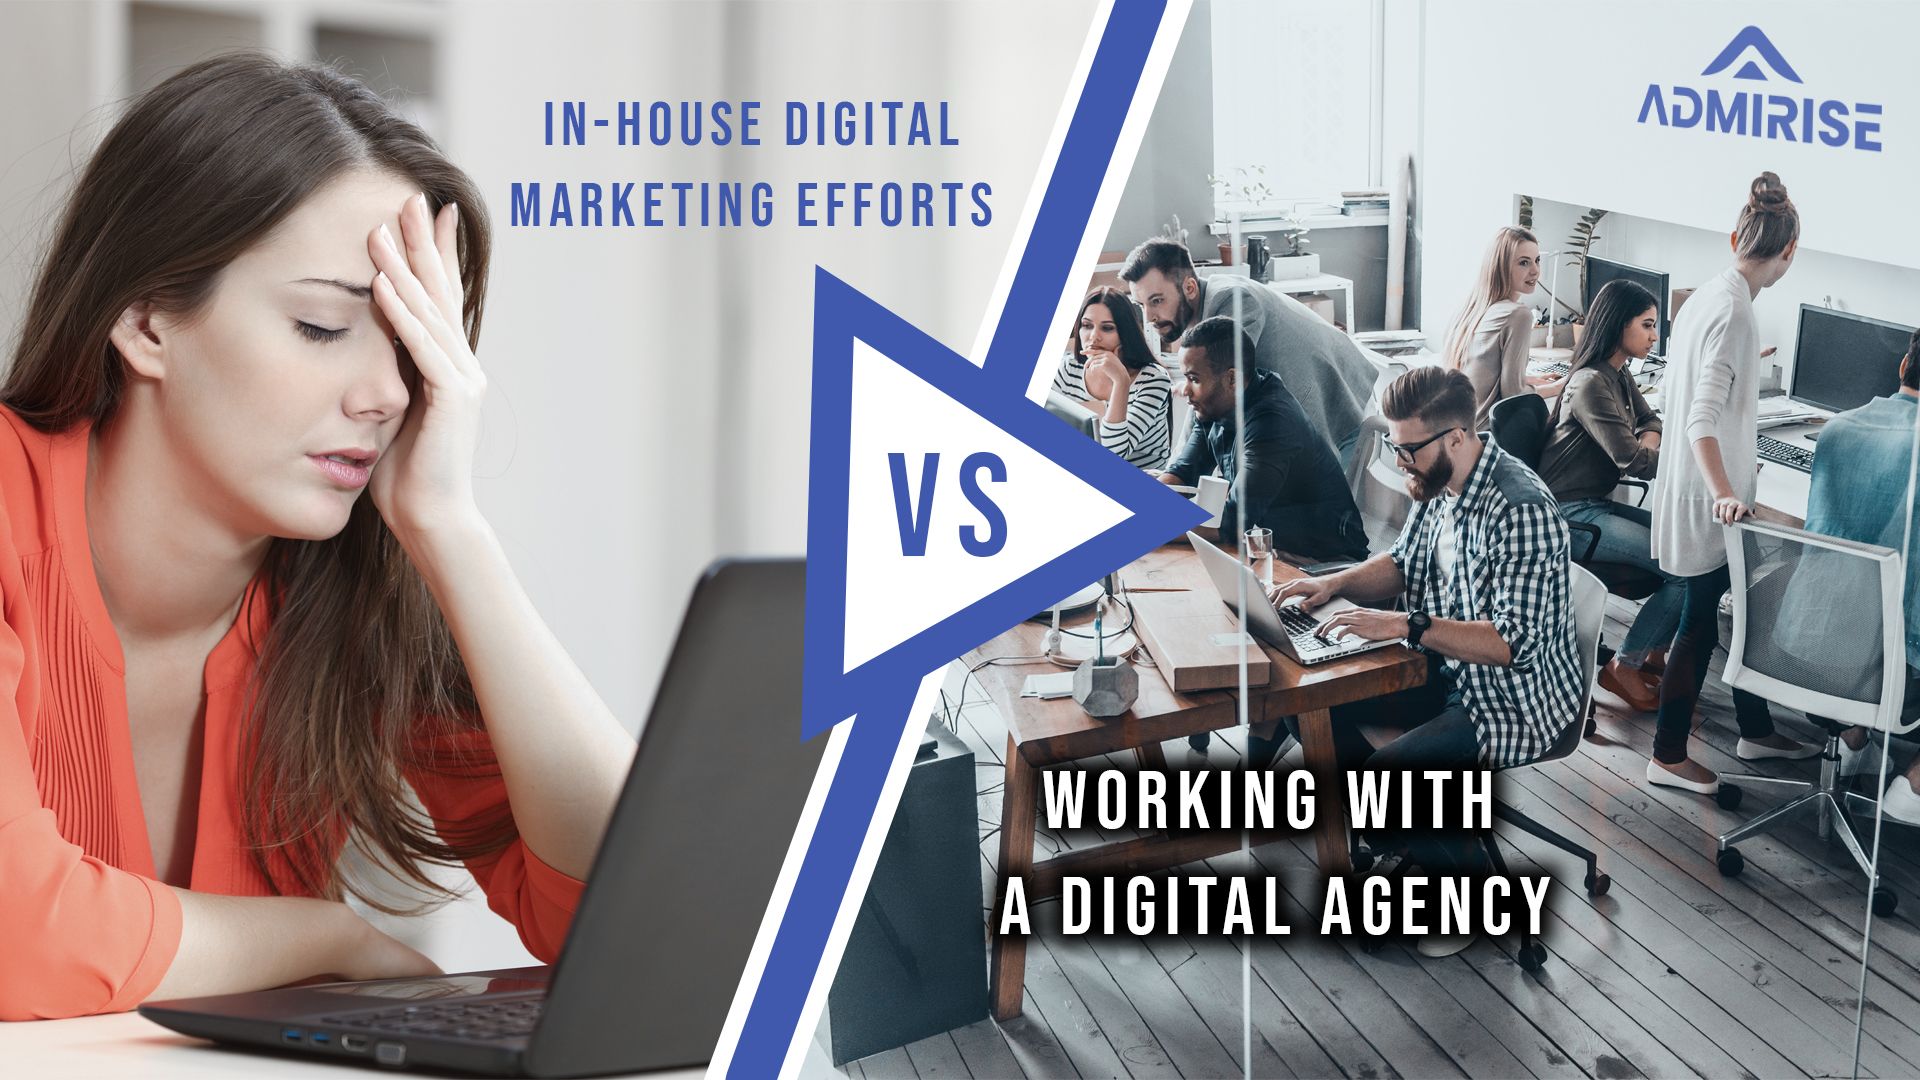 In-House Digital Marketing Efforts Vs. Working with a Digital Agency